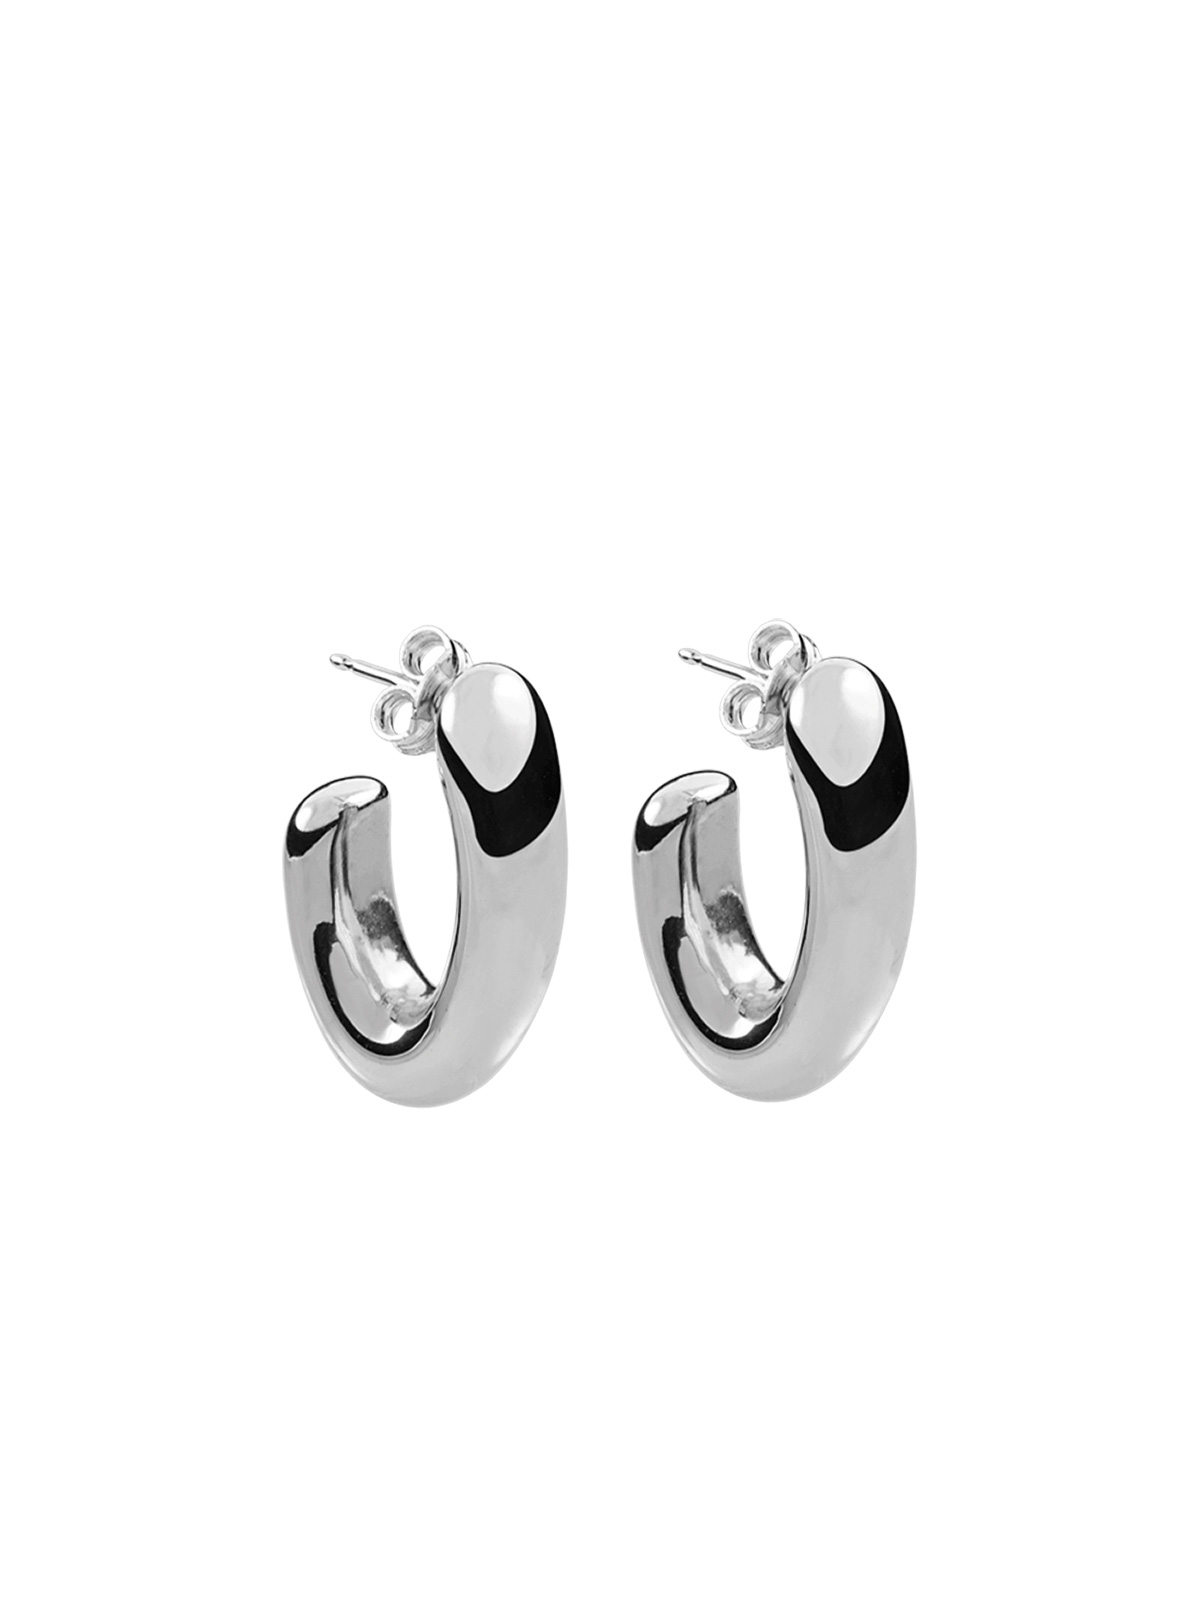 Silly Silver Oval Aro Earrings 925